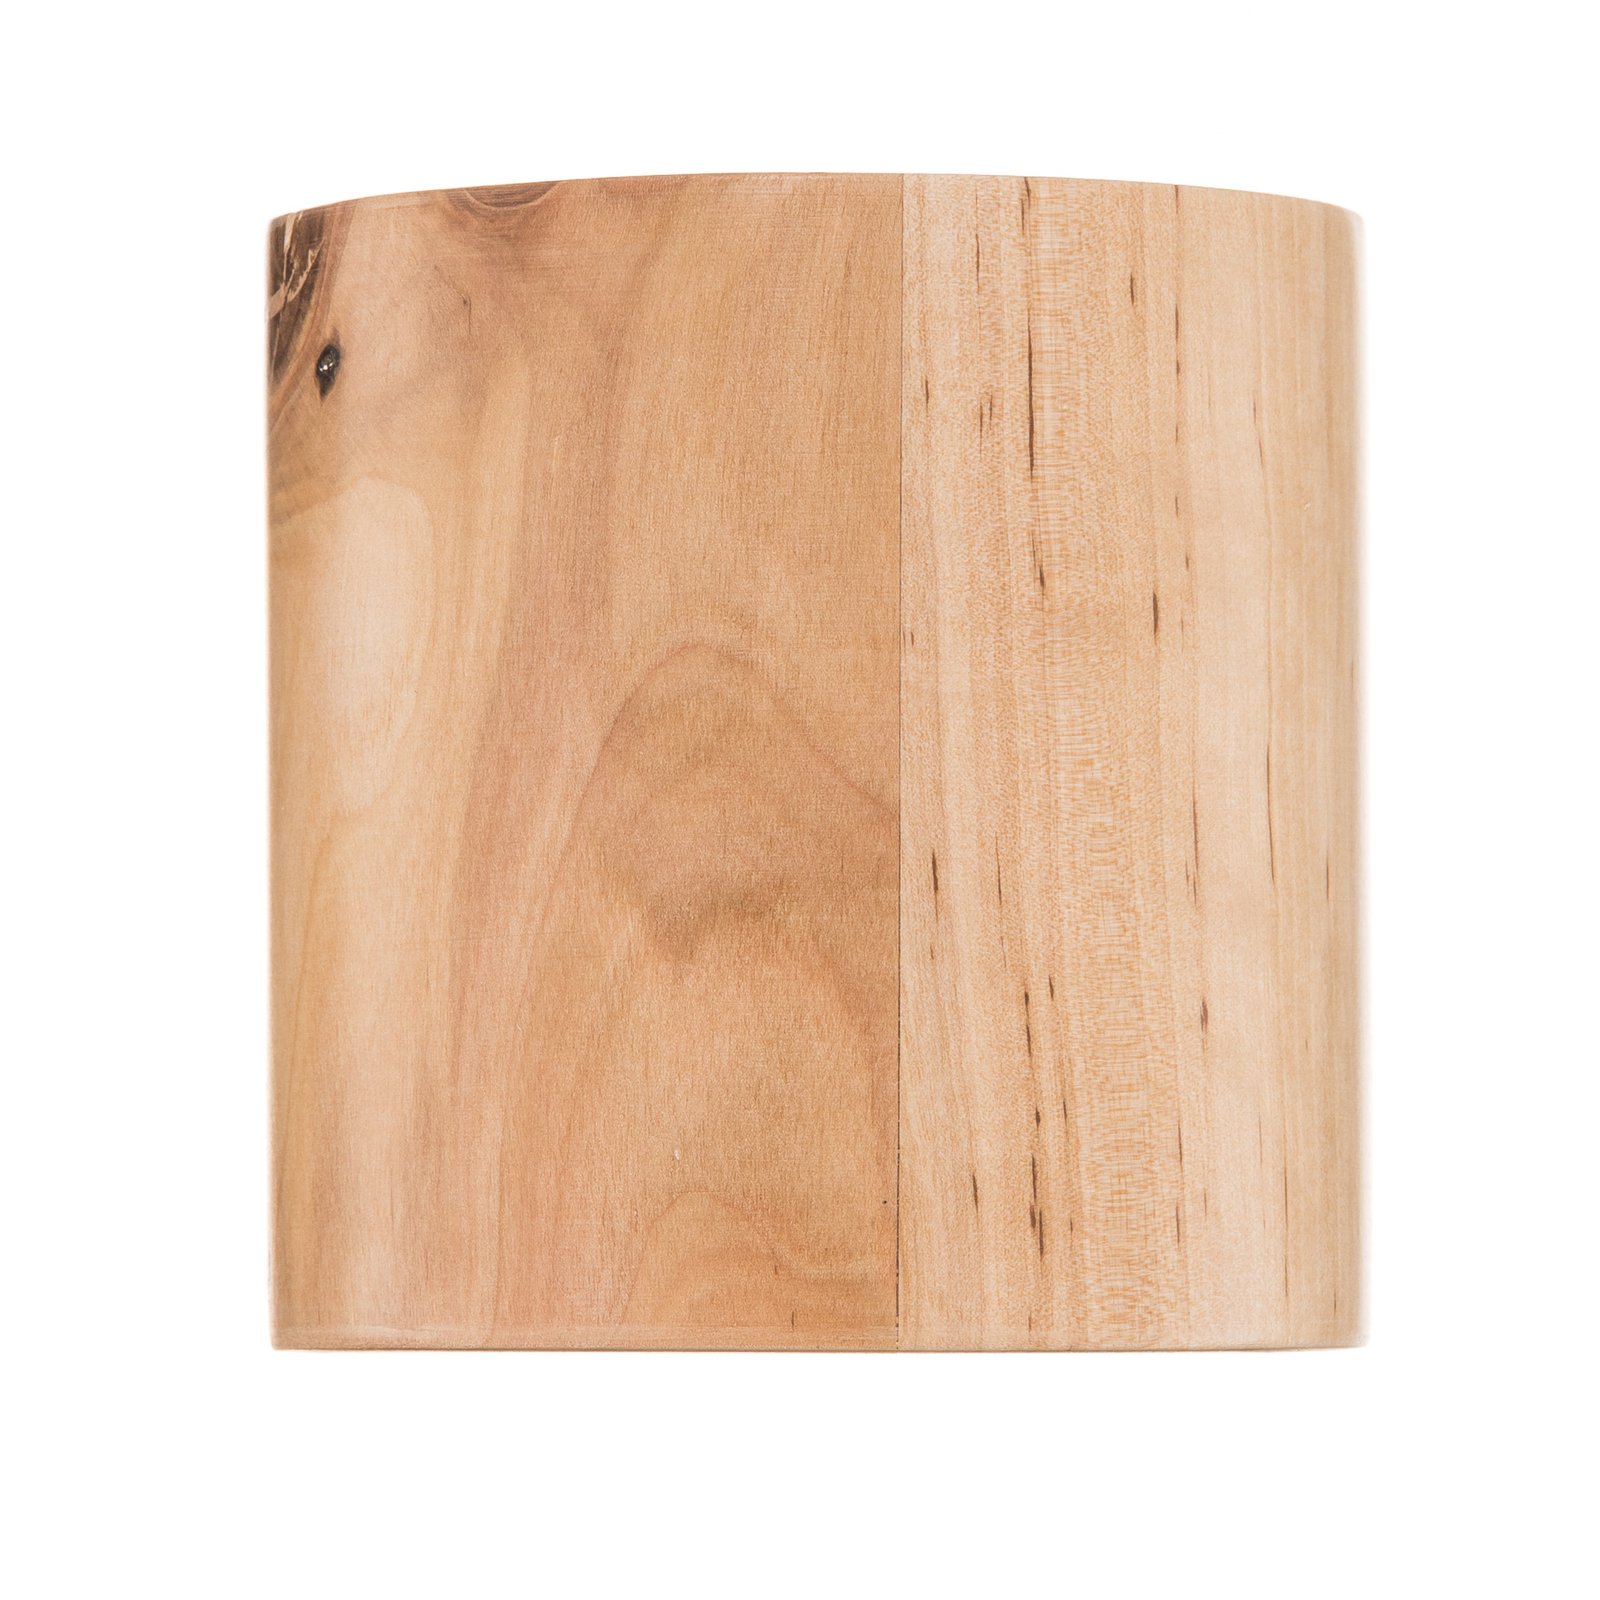 Ara ceiling light as a wooden cylinder